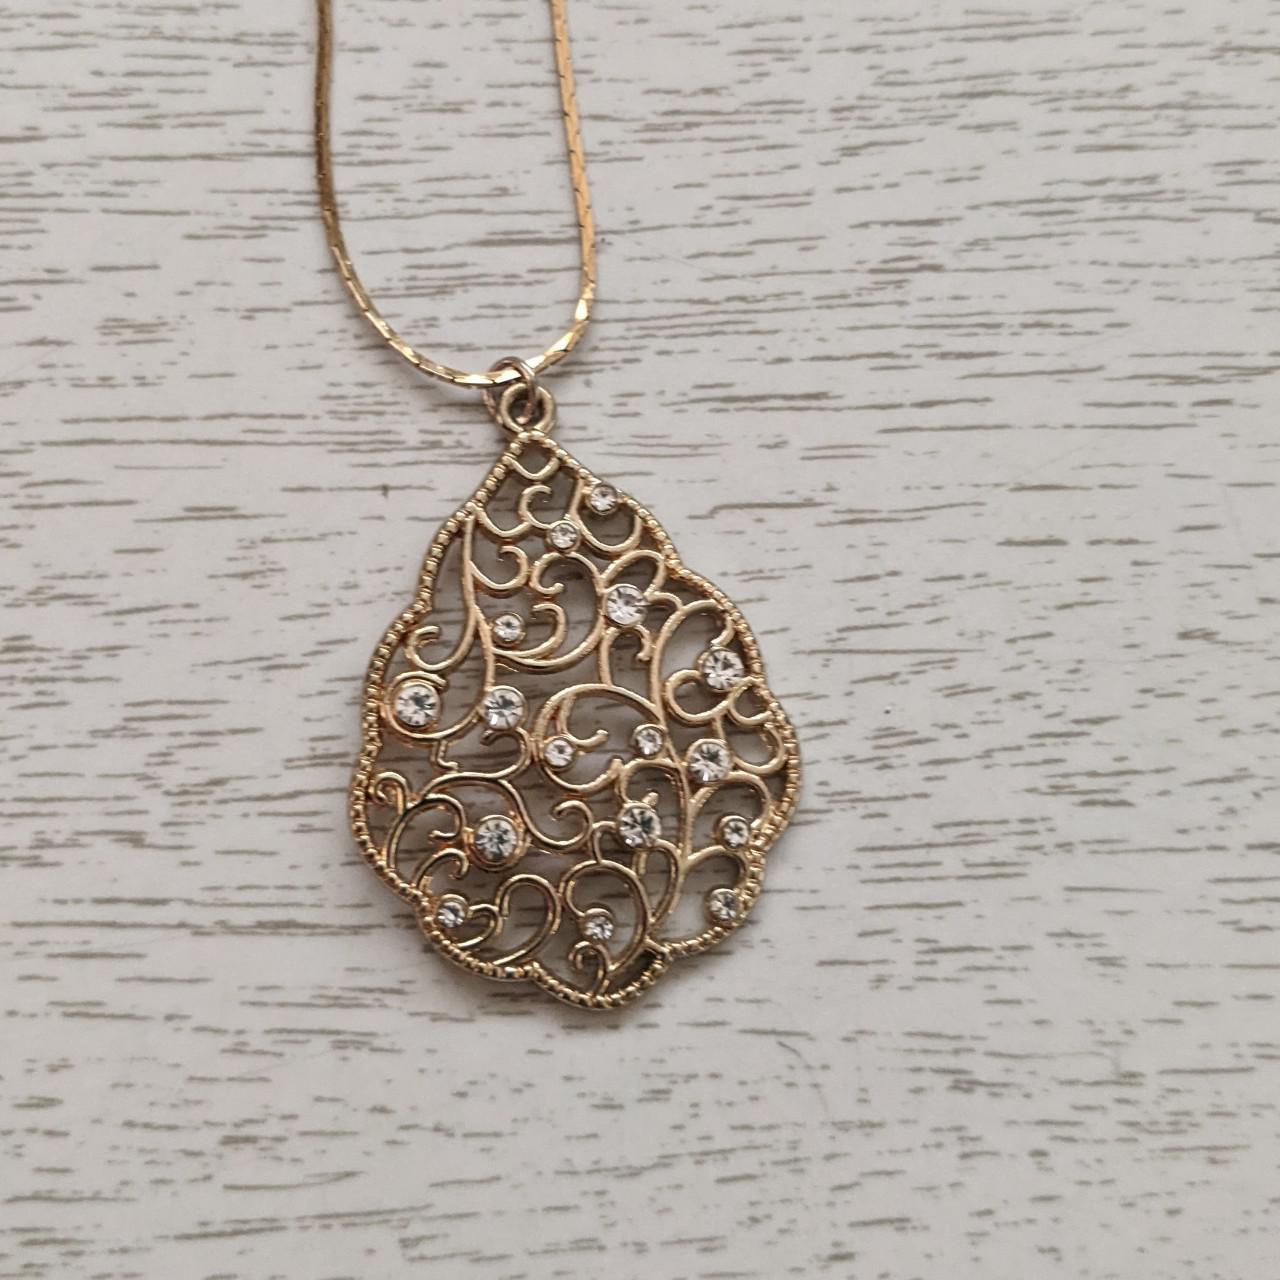 Pretty golden teardrop-shaped pendant necklace with... - Depop